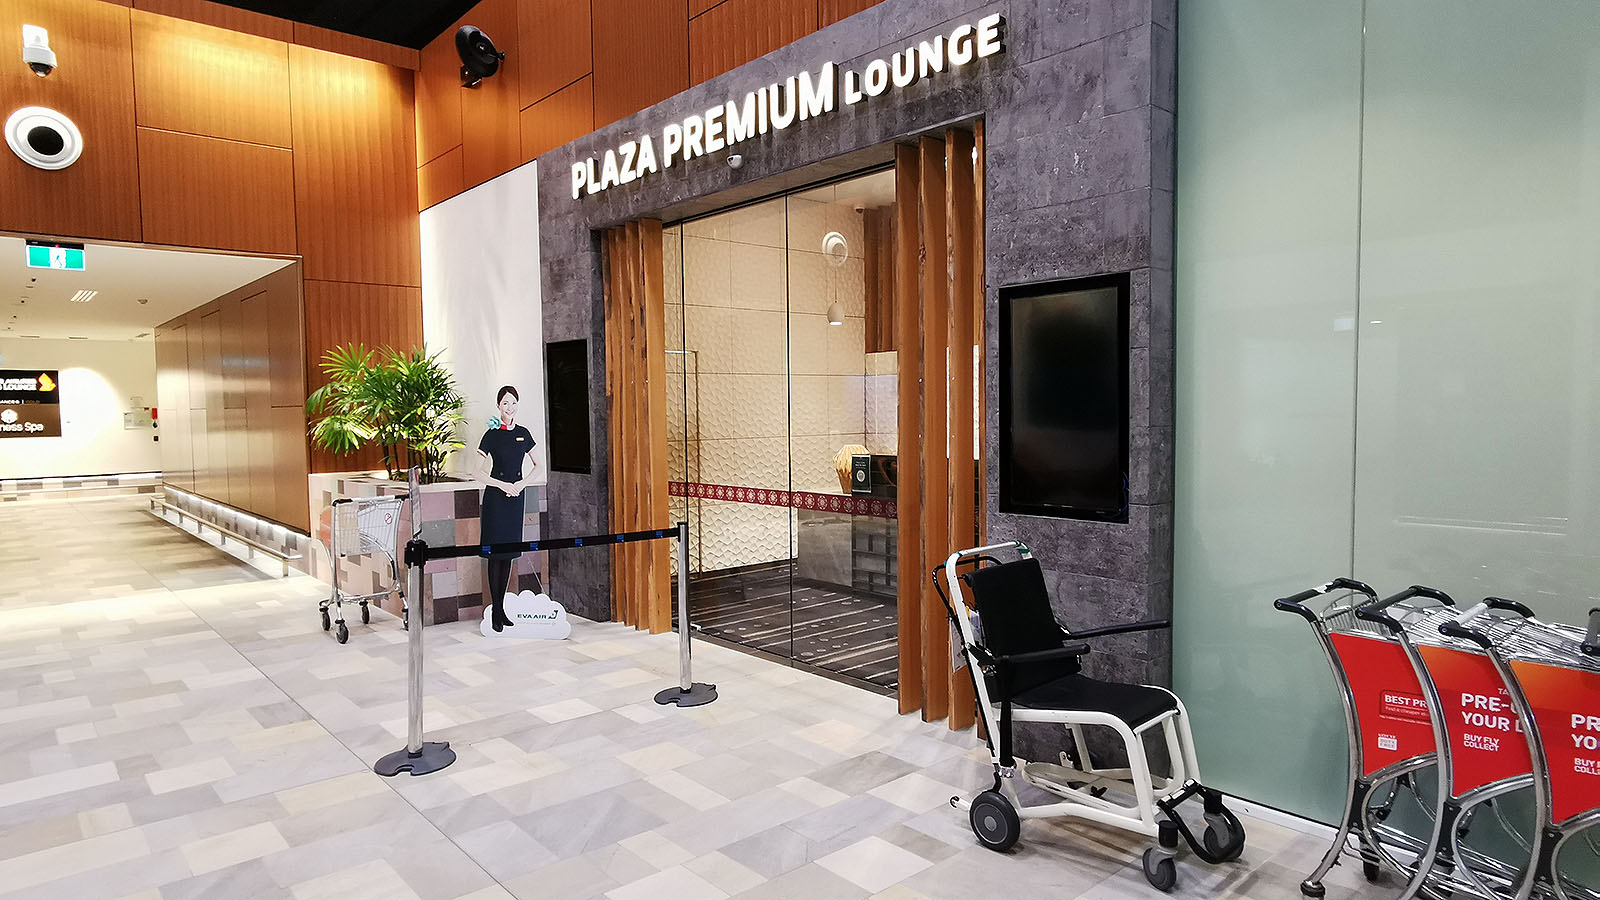 Plaza Premium Lounge, Brisbane